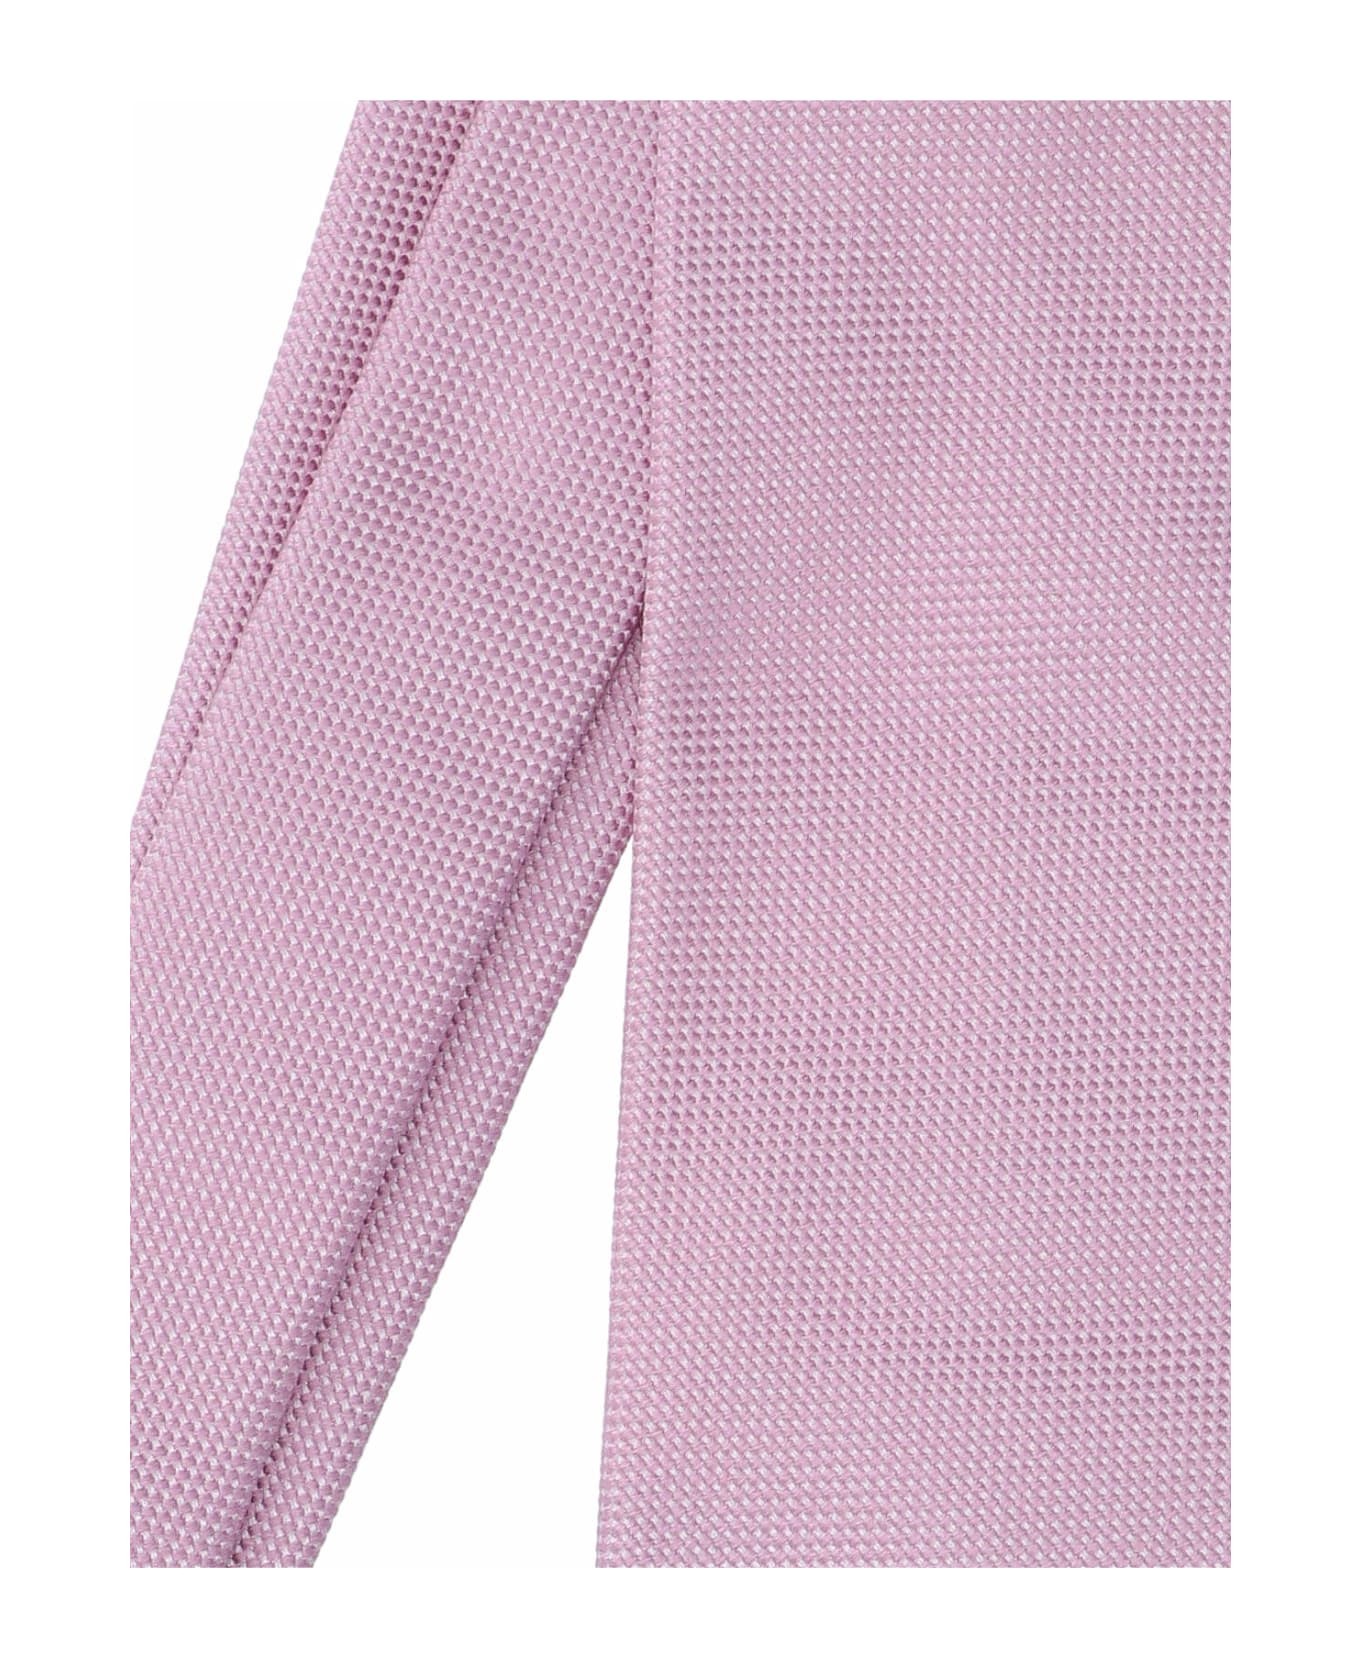 Tom Ford Silk Tie - Pink